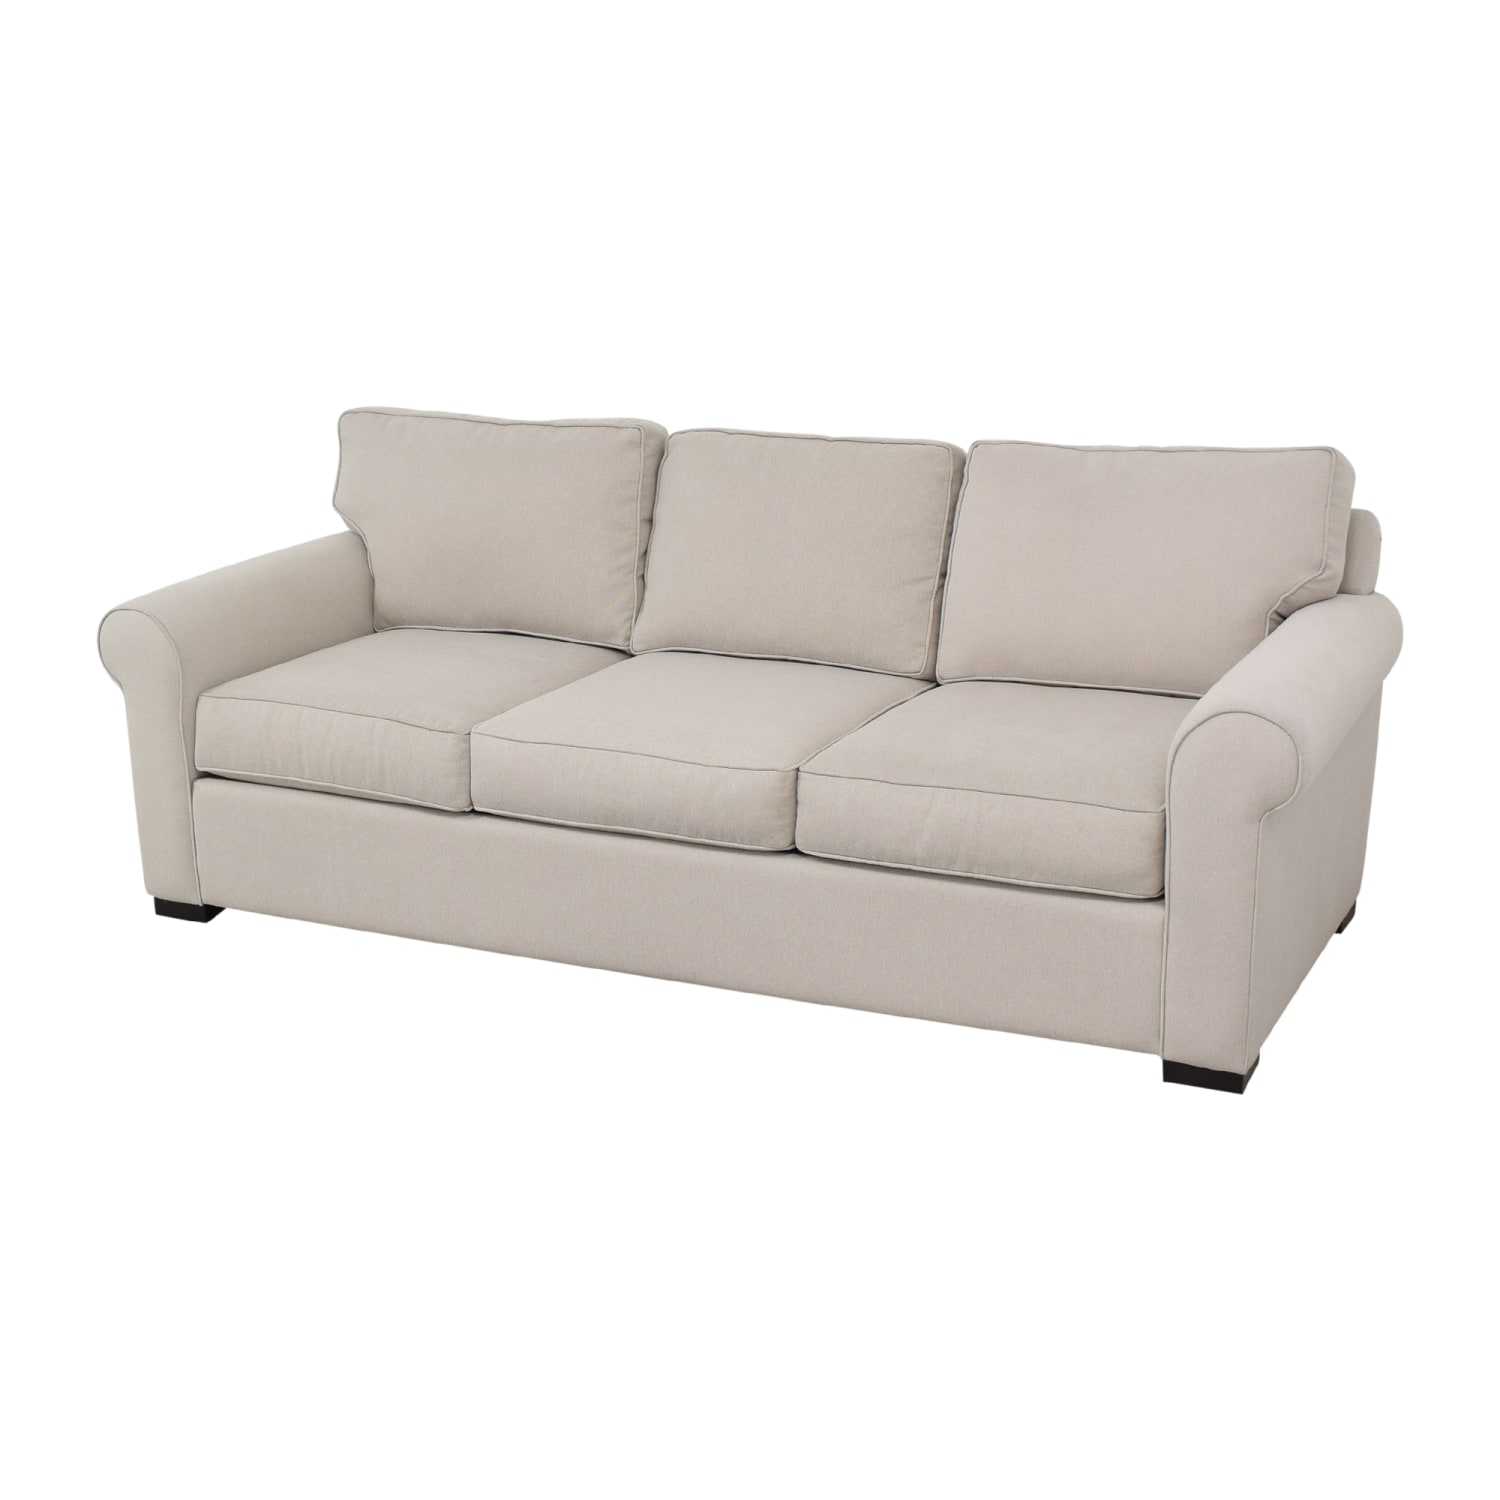 Macy's Macy's Upholstered Sofa for sale